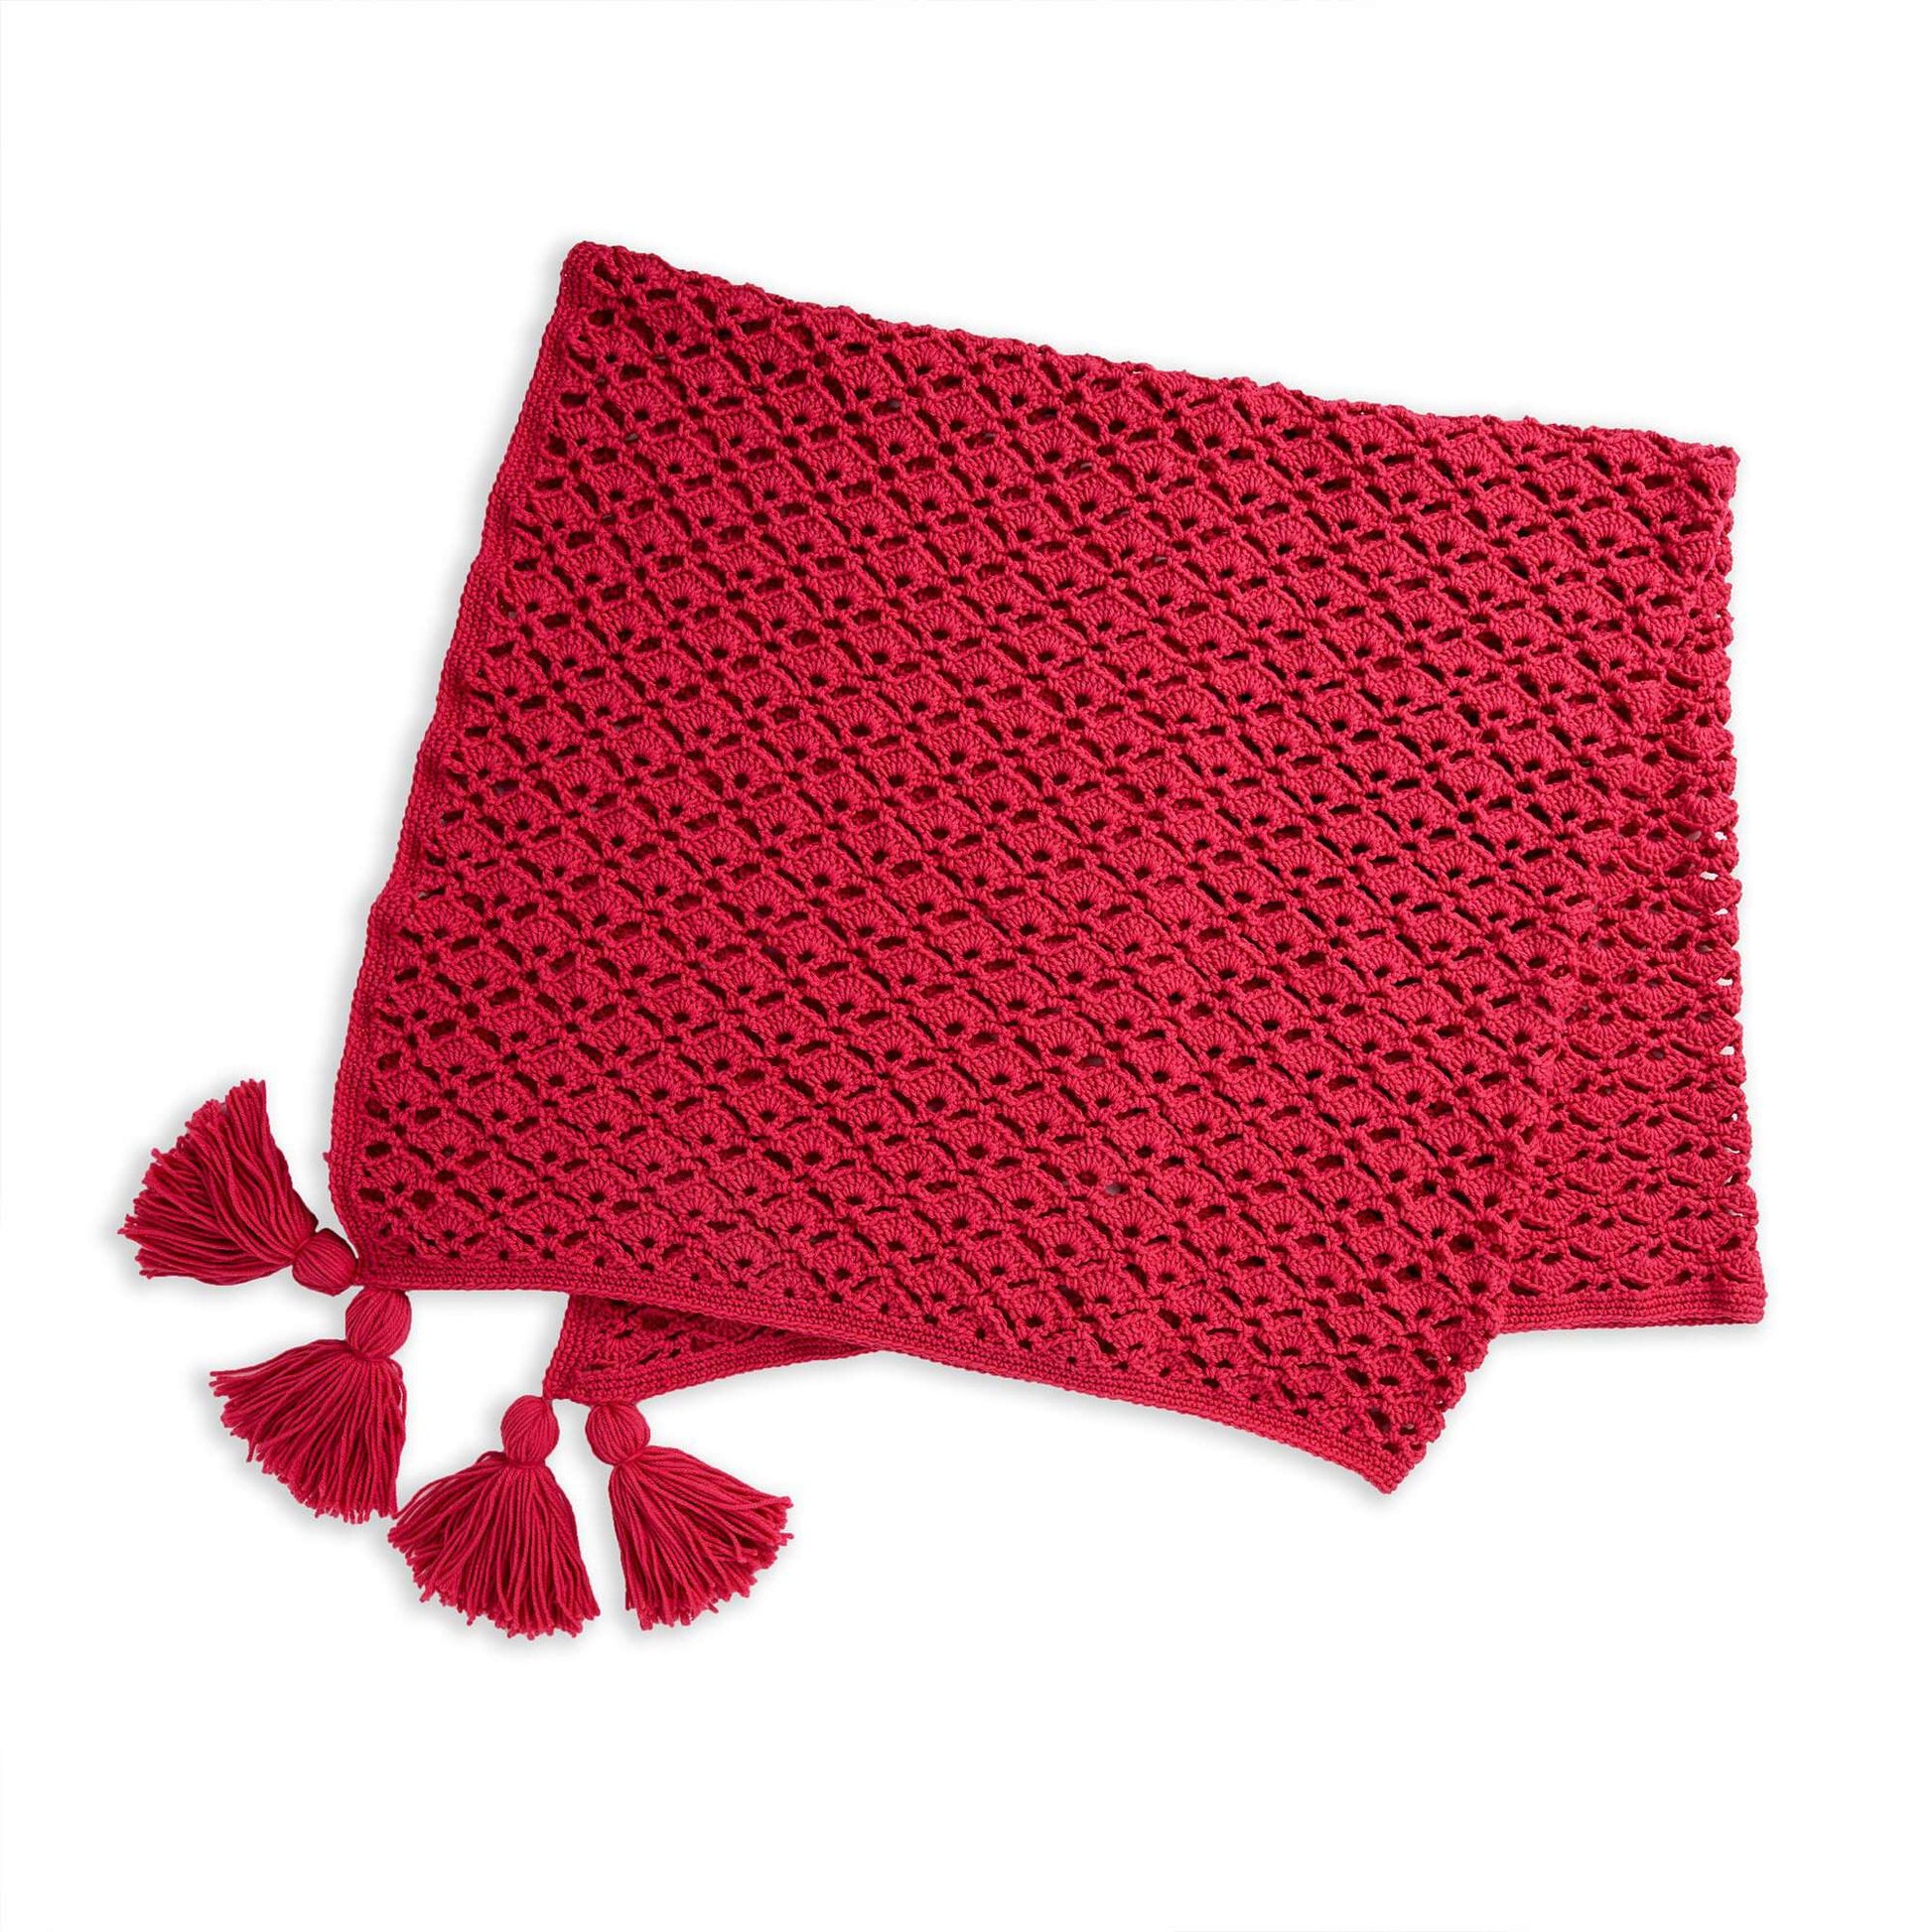 Caron Shell Stitch Crochet Blanket Crochet Blanket made in Caron One Pound yarn